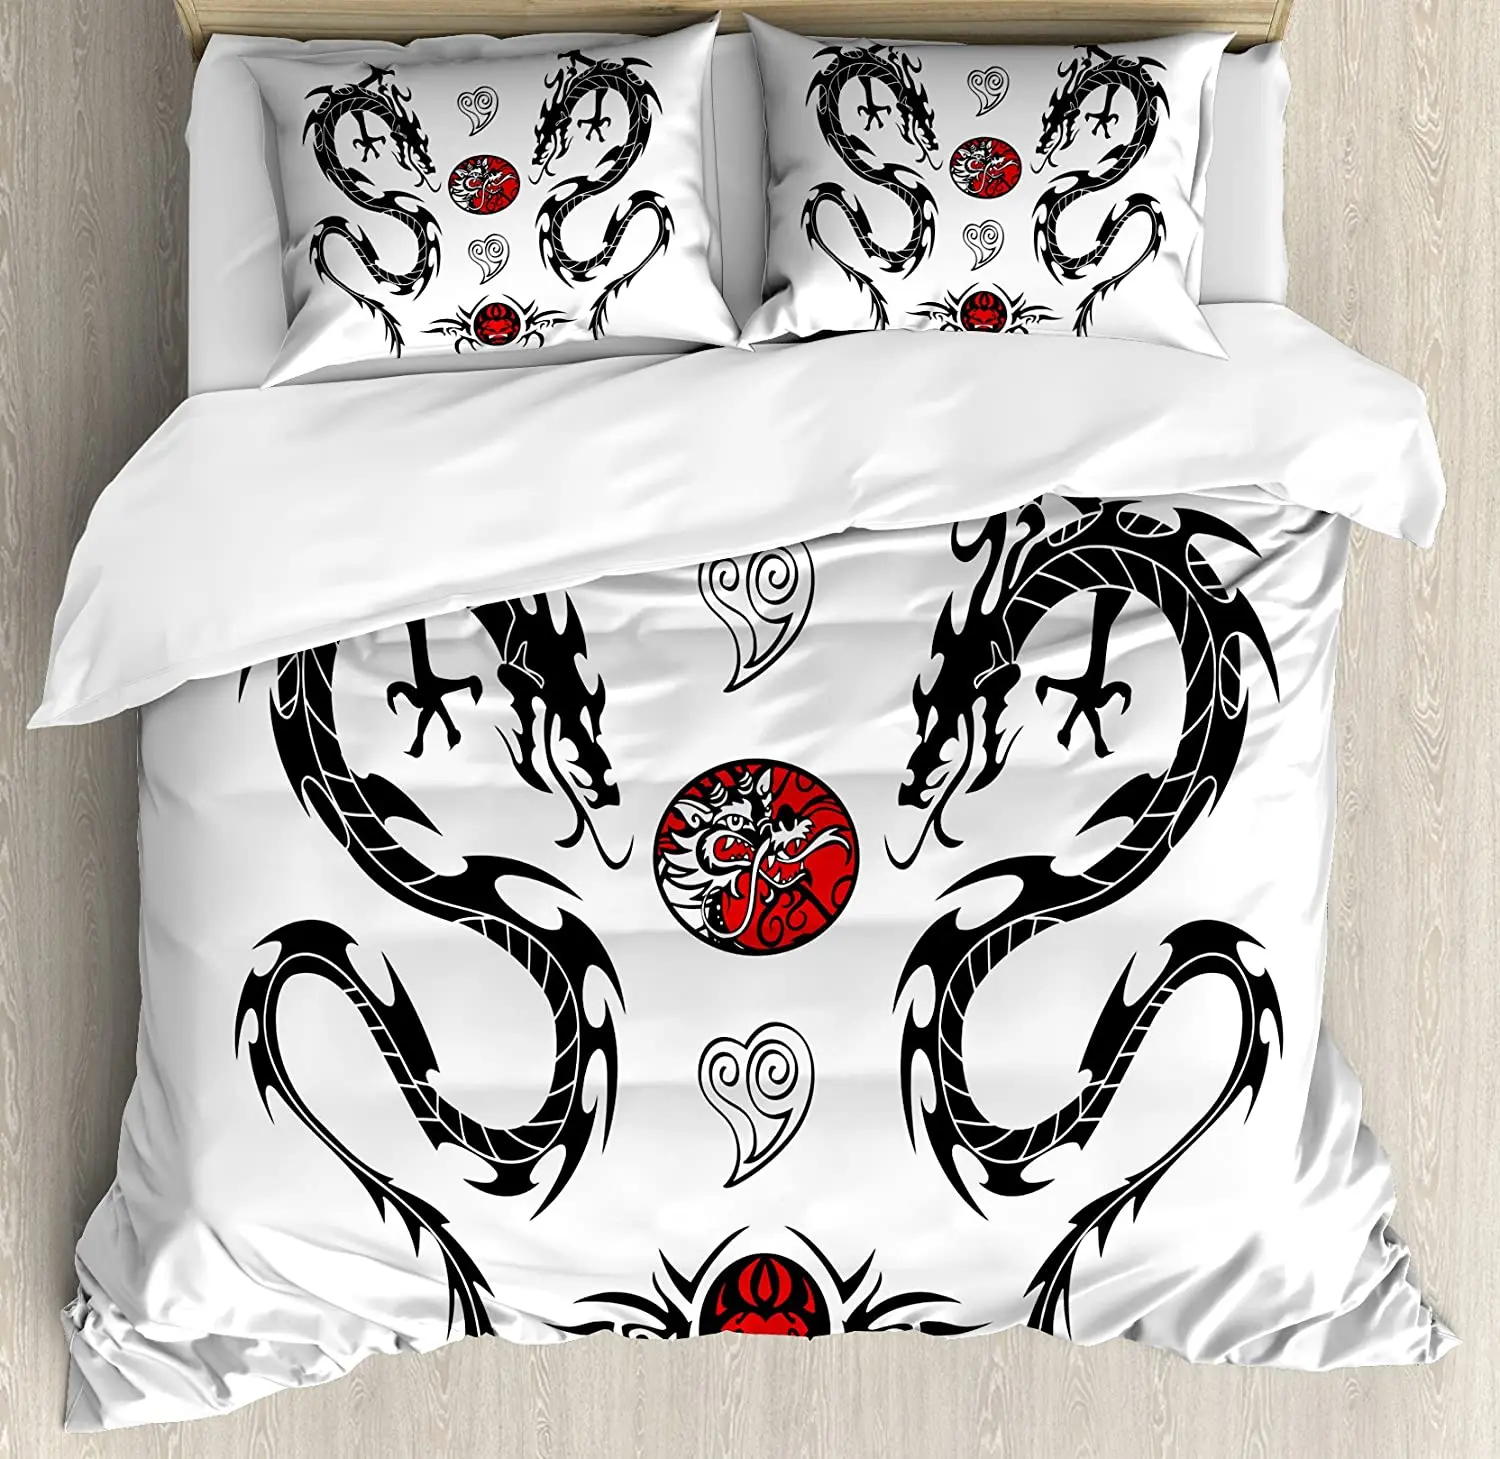 

Japanese Dragon Bedding Set Comforter Duvet Cover Pillow Shams Tribal Tattoo Style Asian Indigenous Bedding Cover Double Bed Set